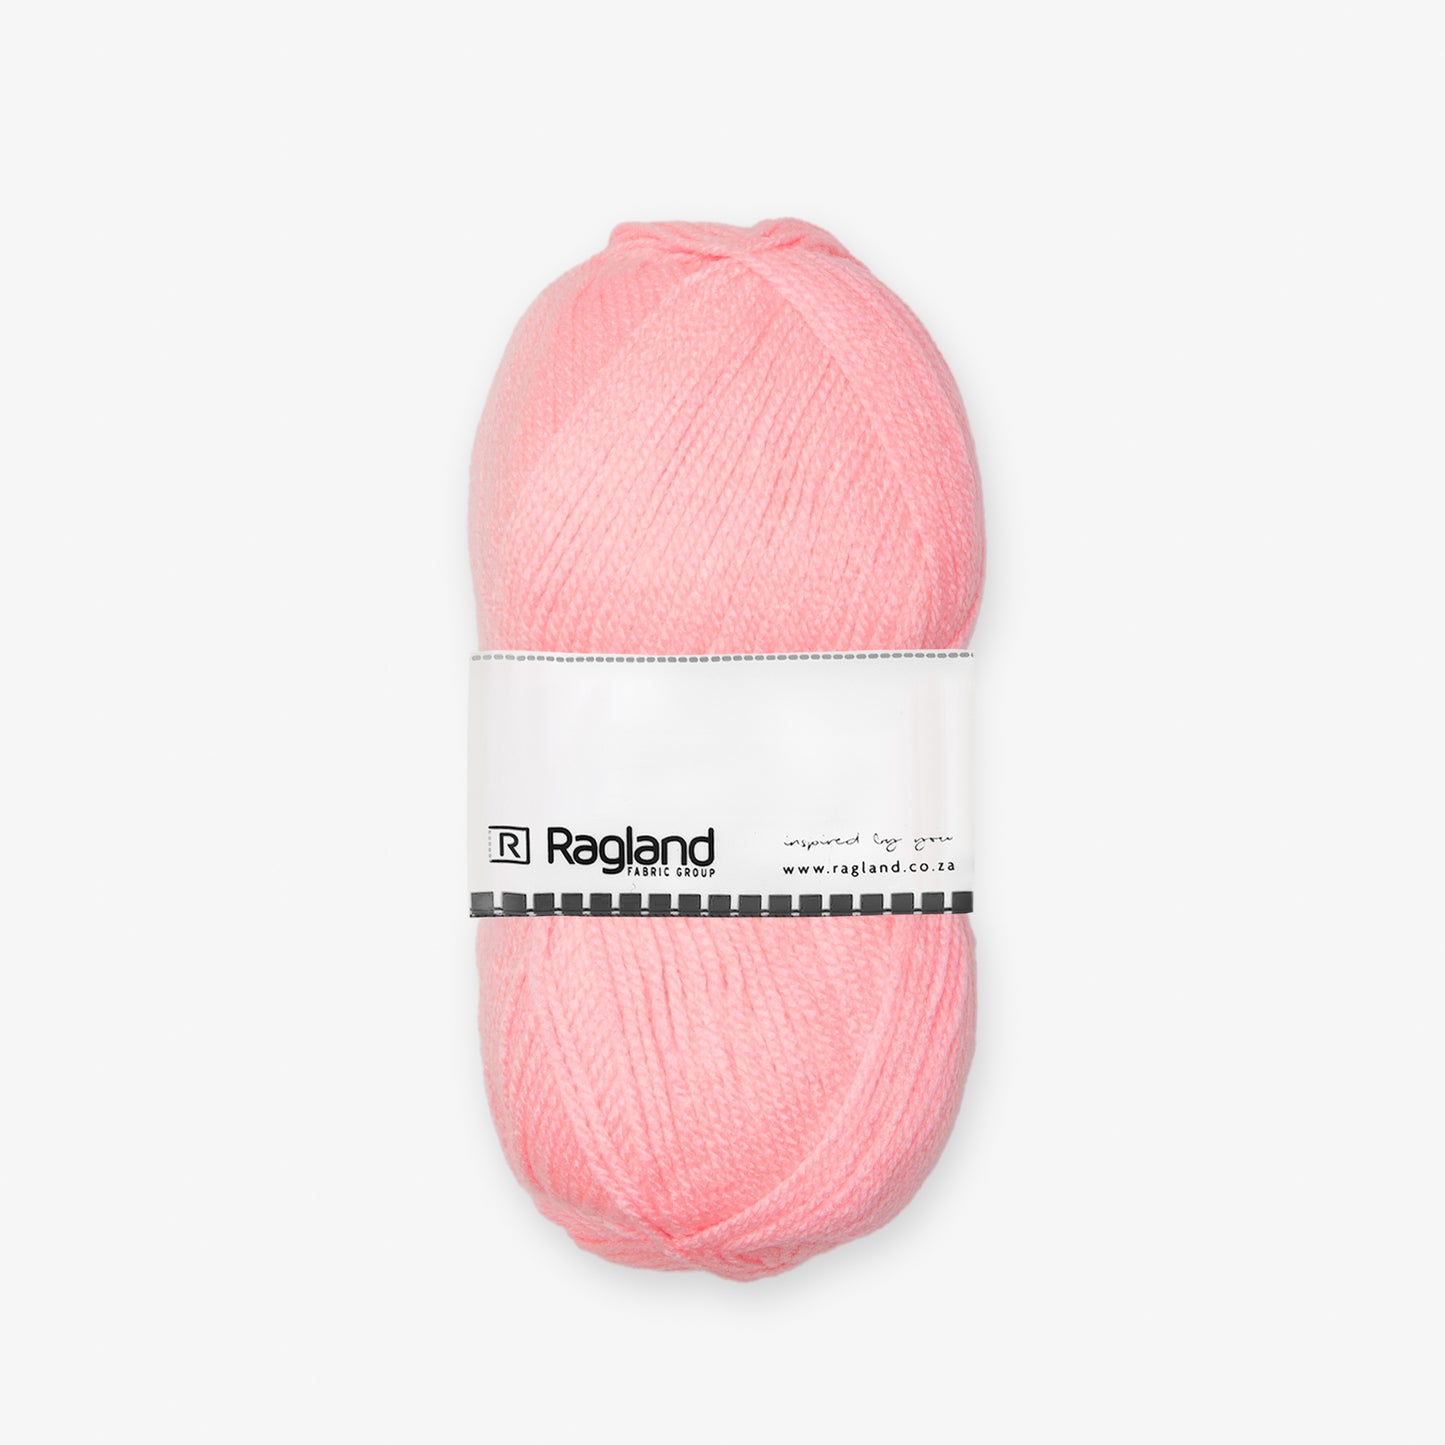 Lollipop Dbl Knit Light Pink #5